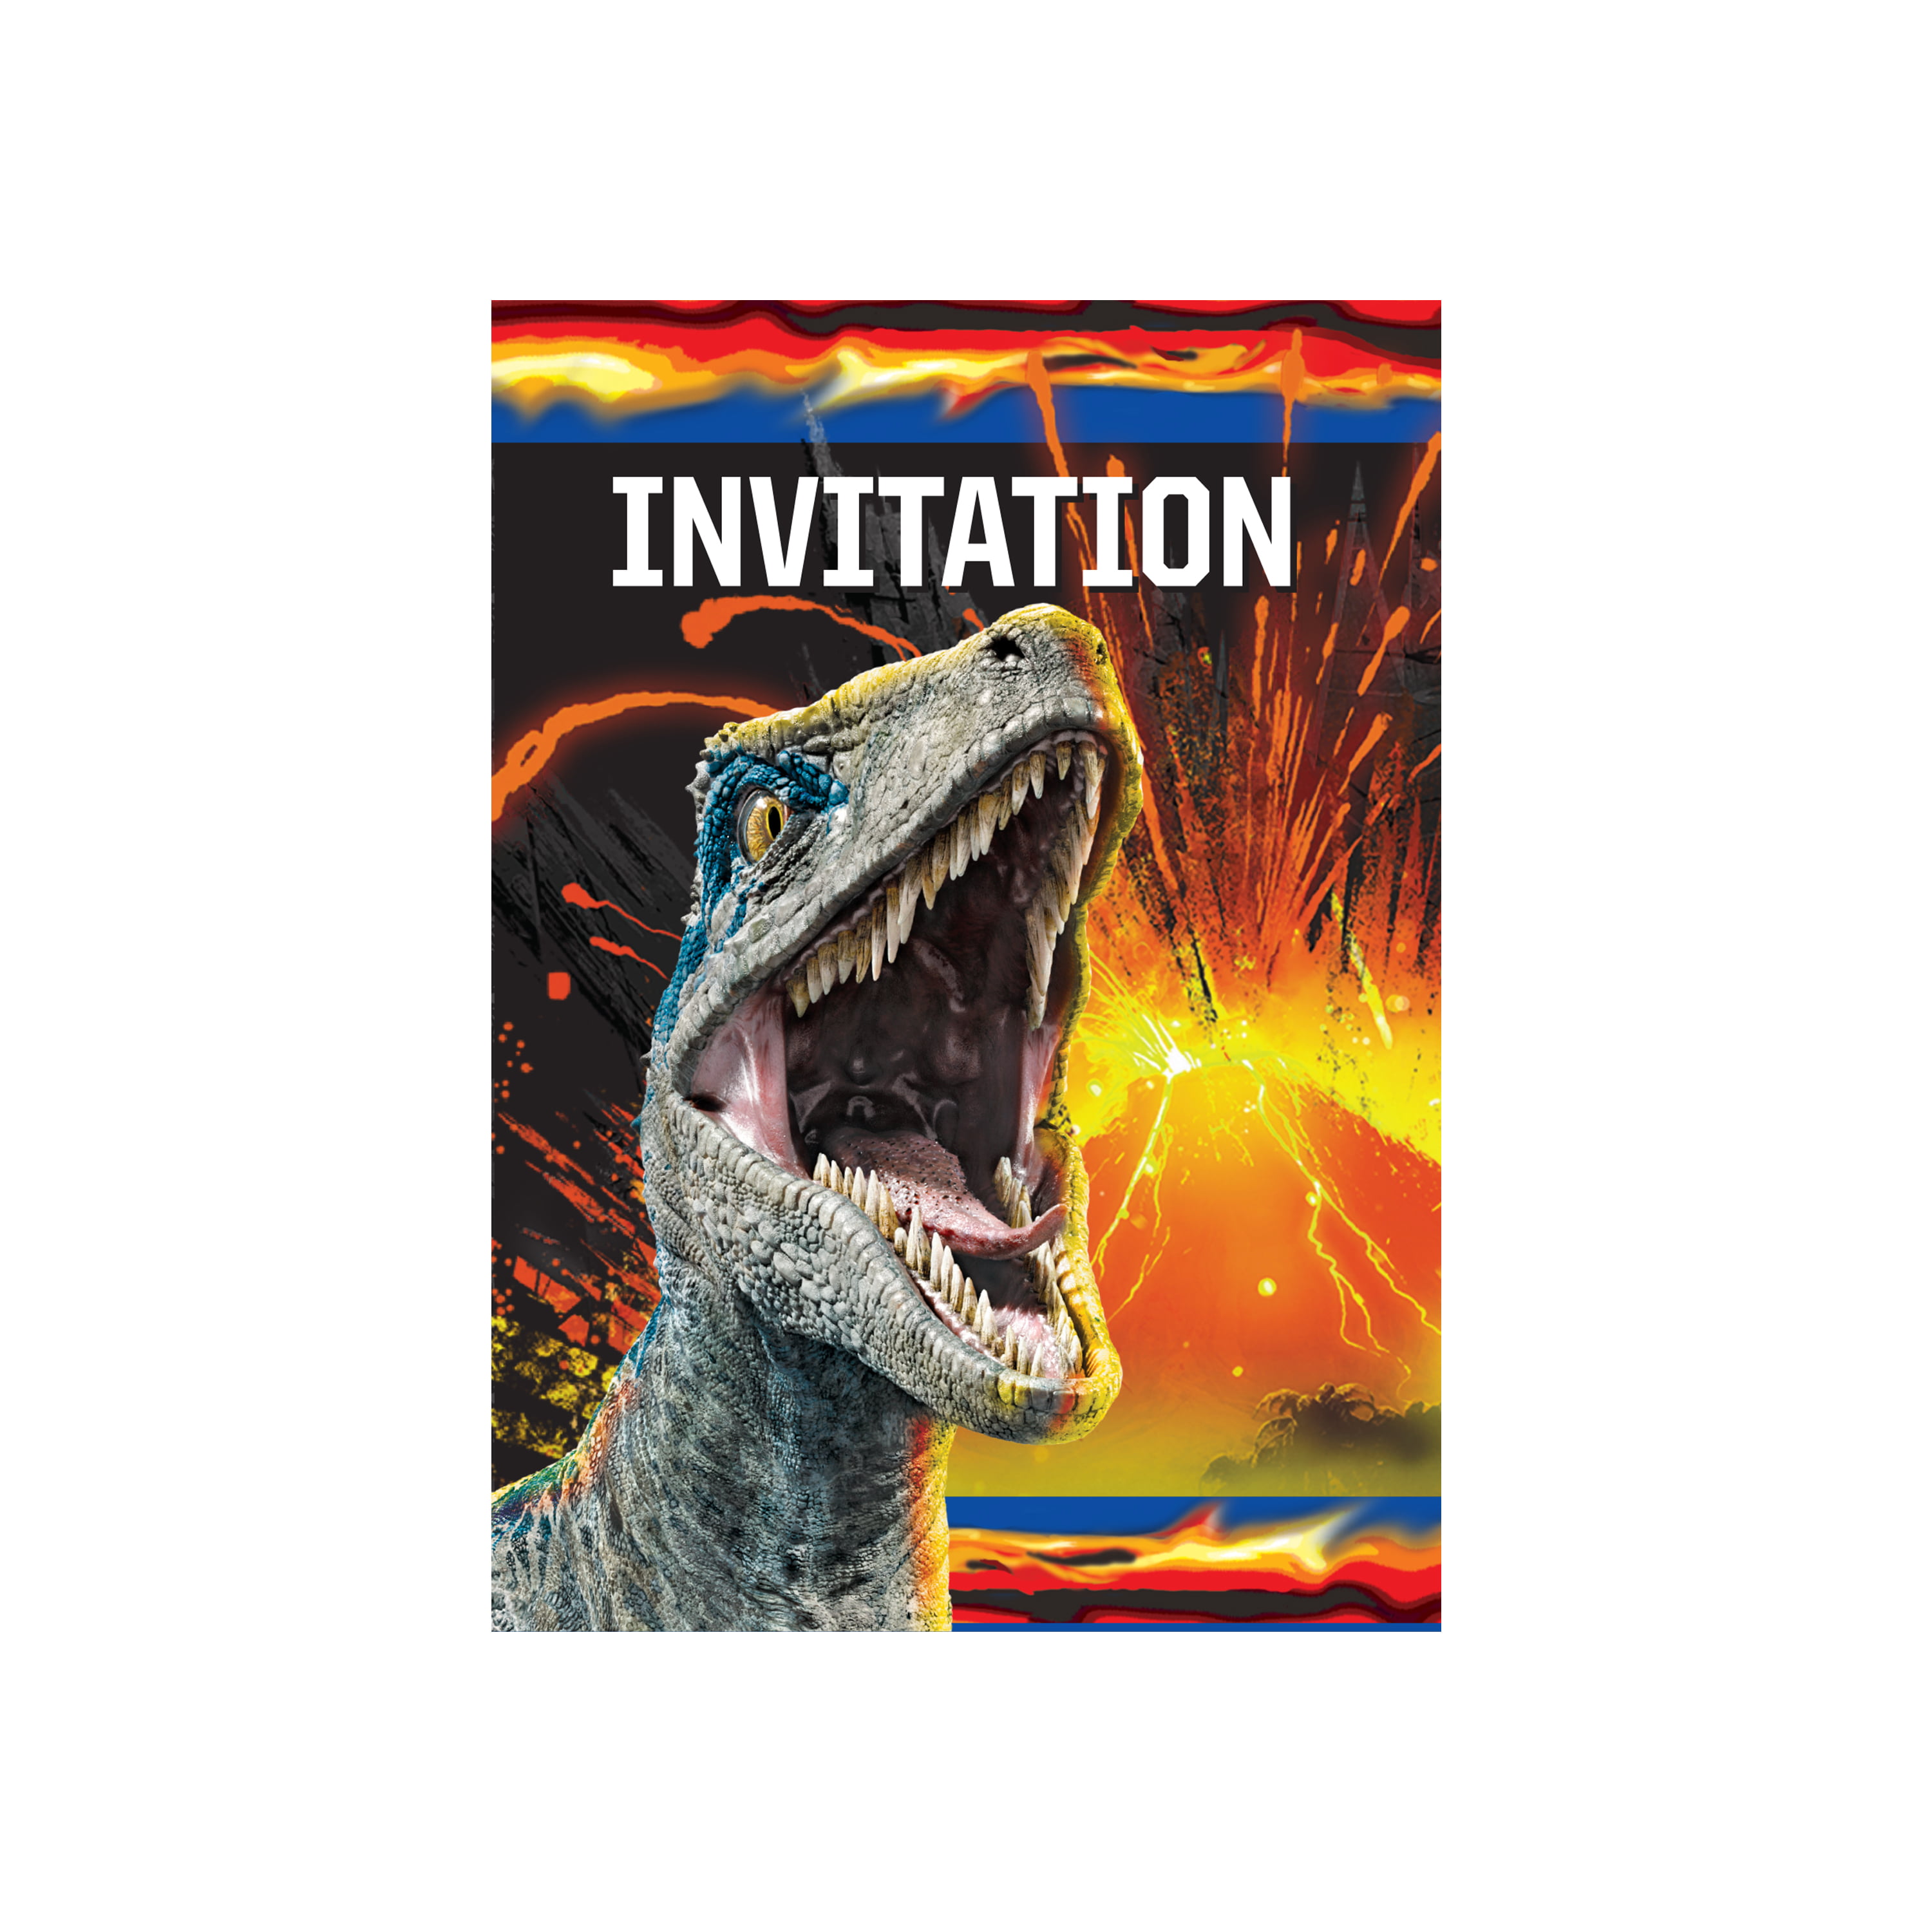 Invitation Jurassic World 